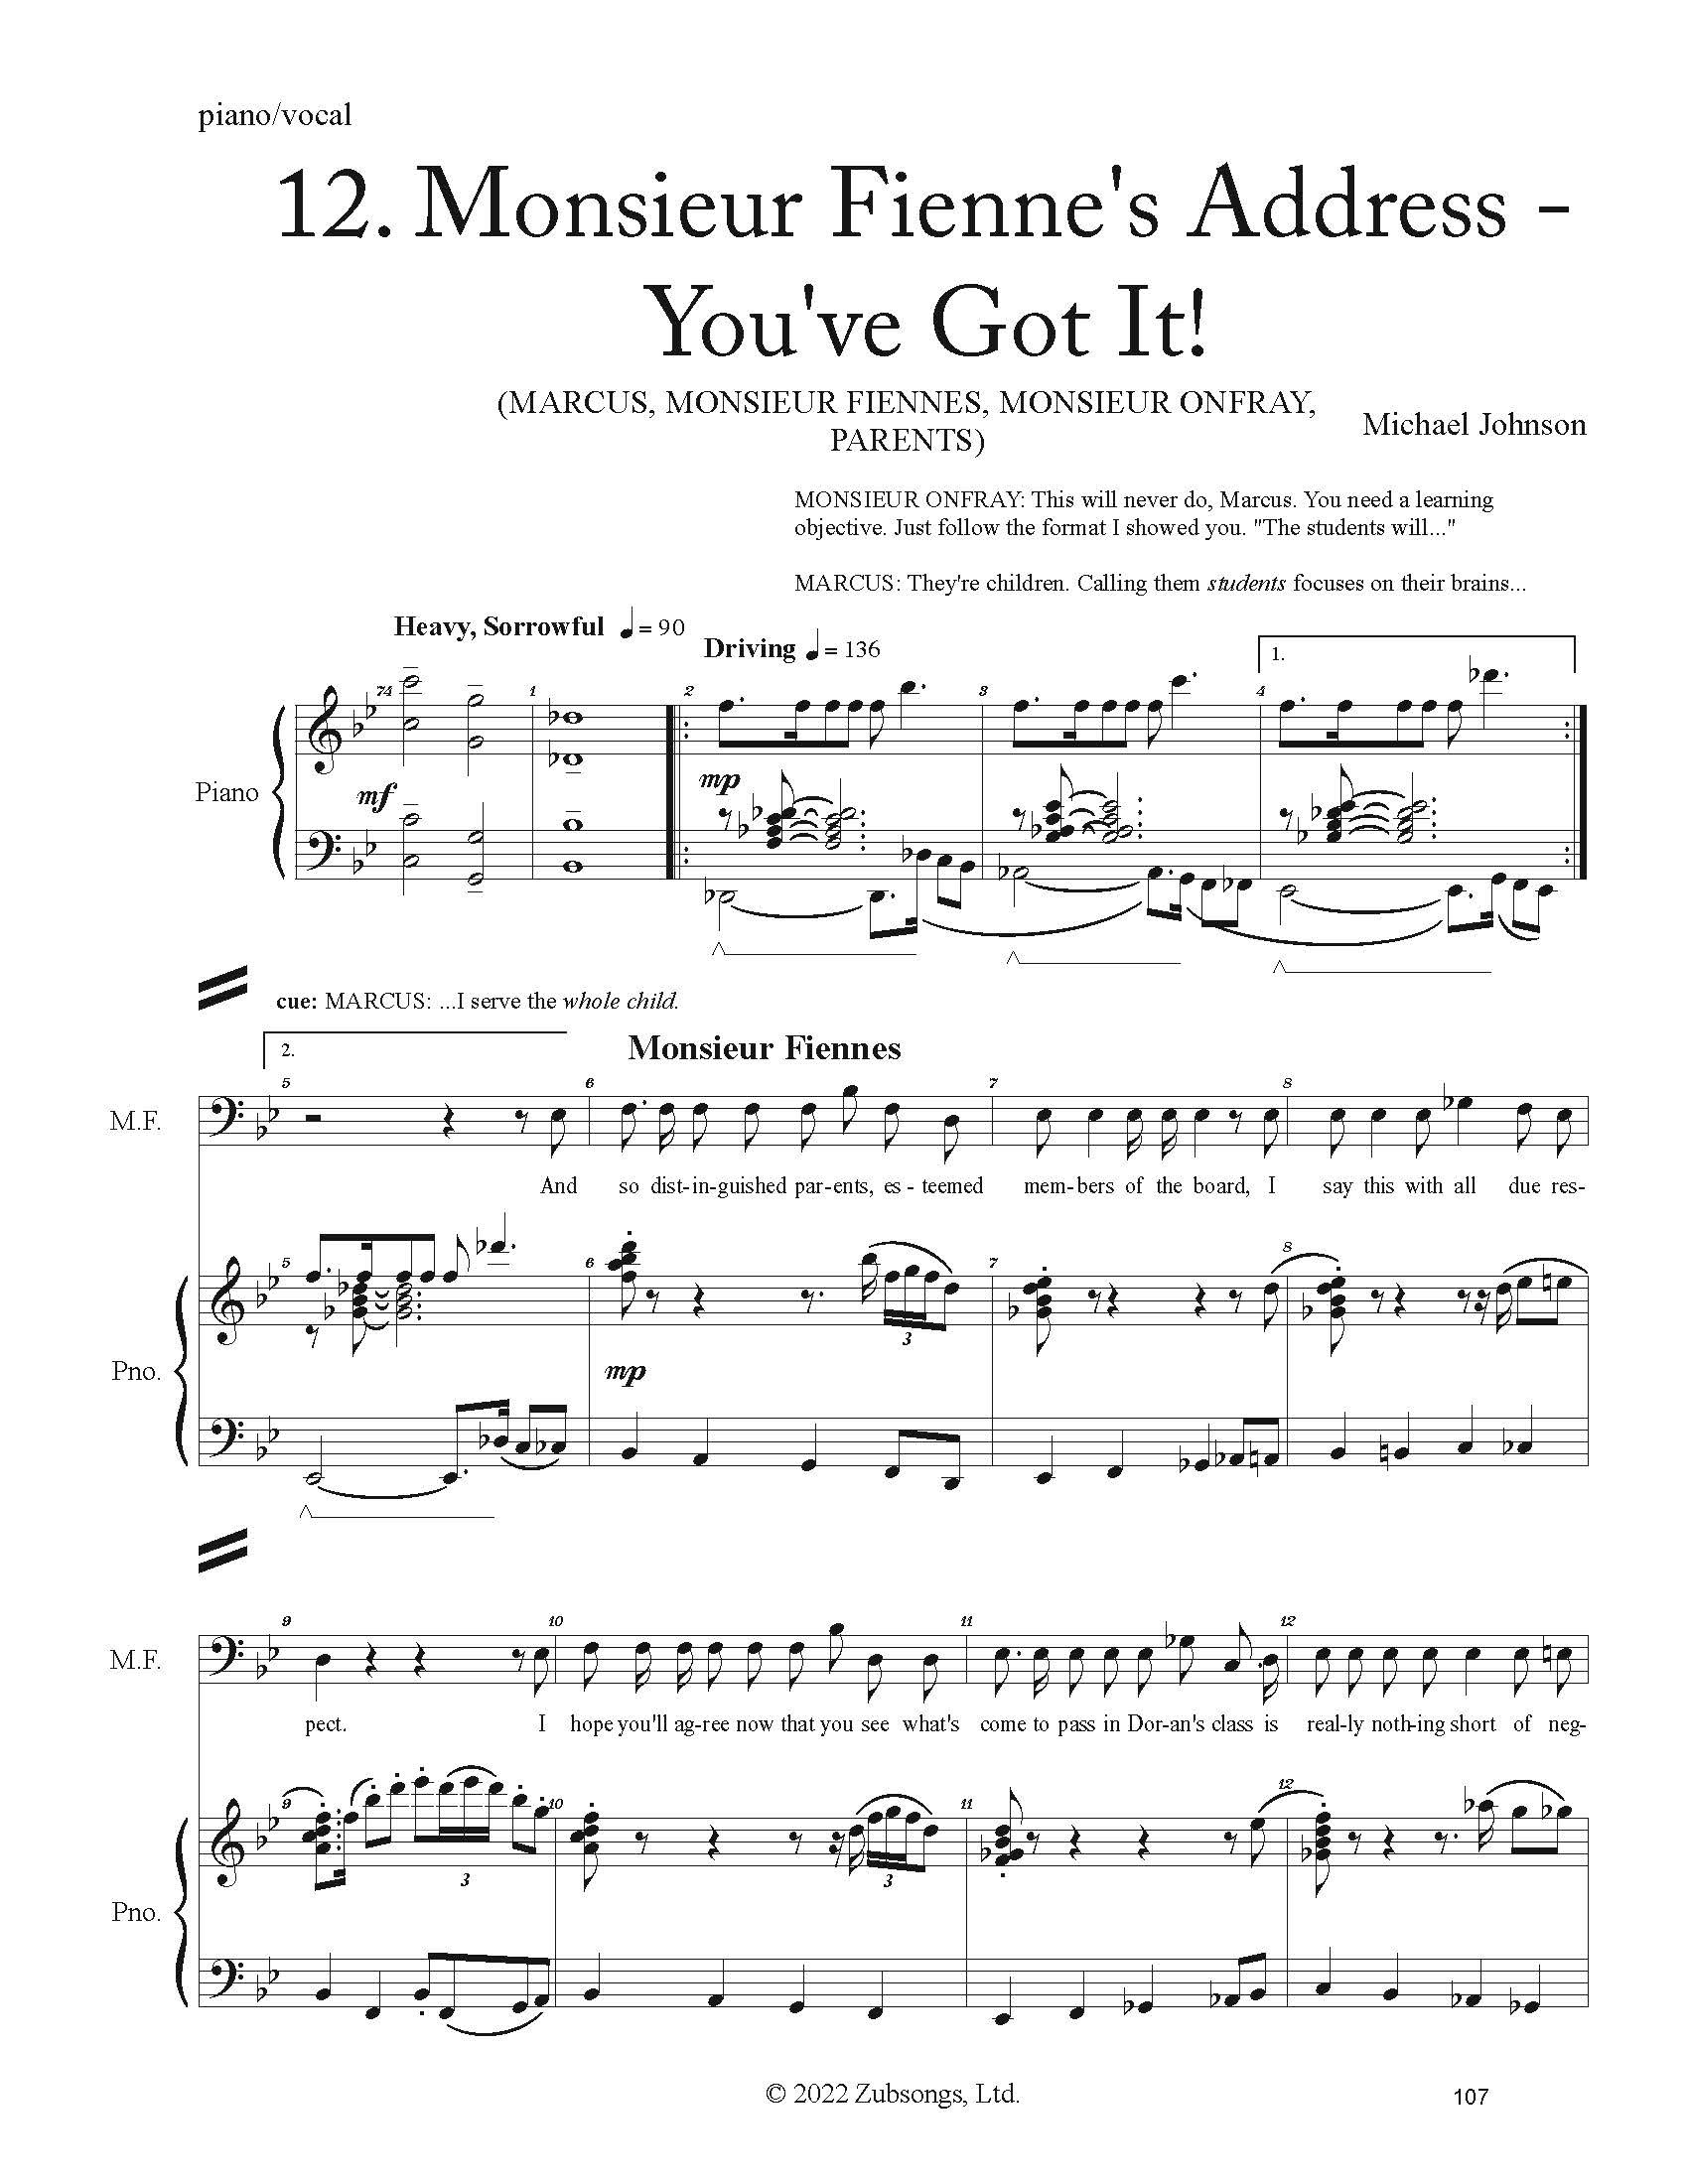 FULL PIANO VOCAL SCORE DRAFT 1 - Score_Page_107.jpg